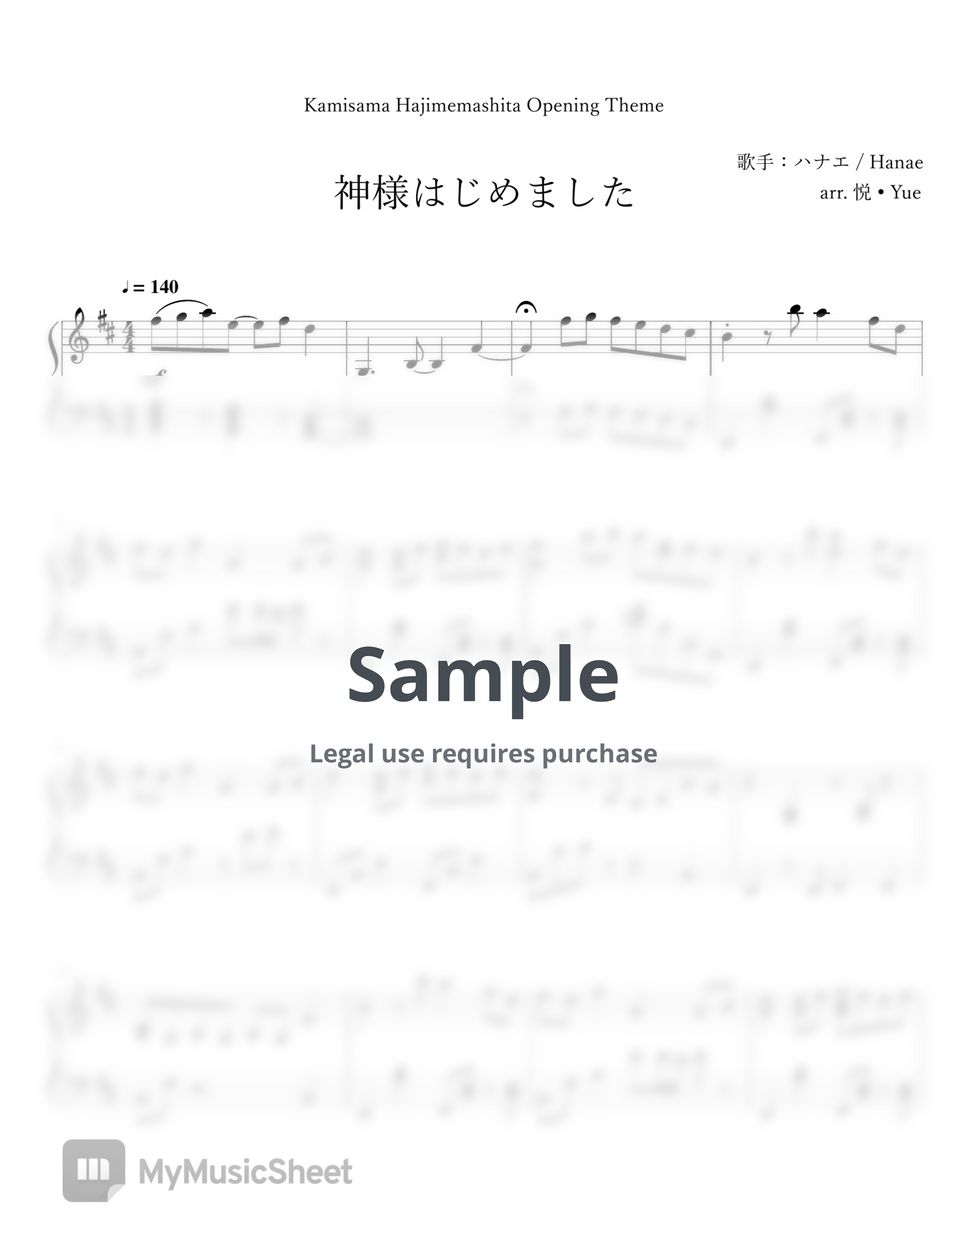 Hanae - Kamisama Kiss OP - 「Kamisama Hajimemashita」 Piano (Arrangement) by 悦 • Yue